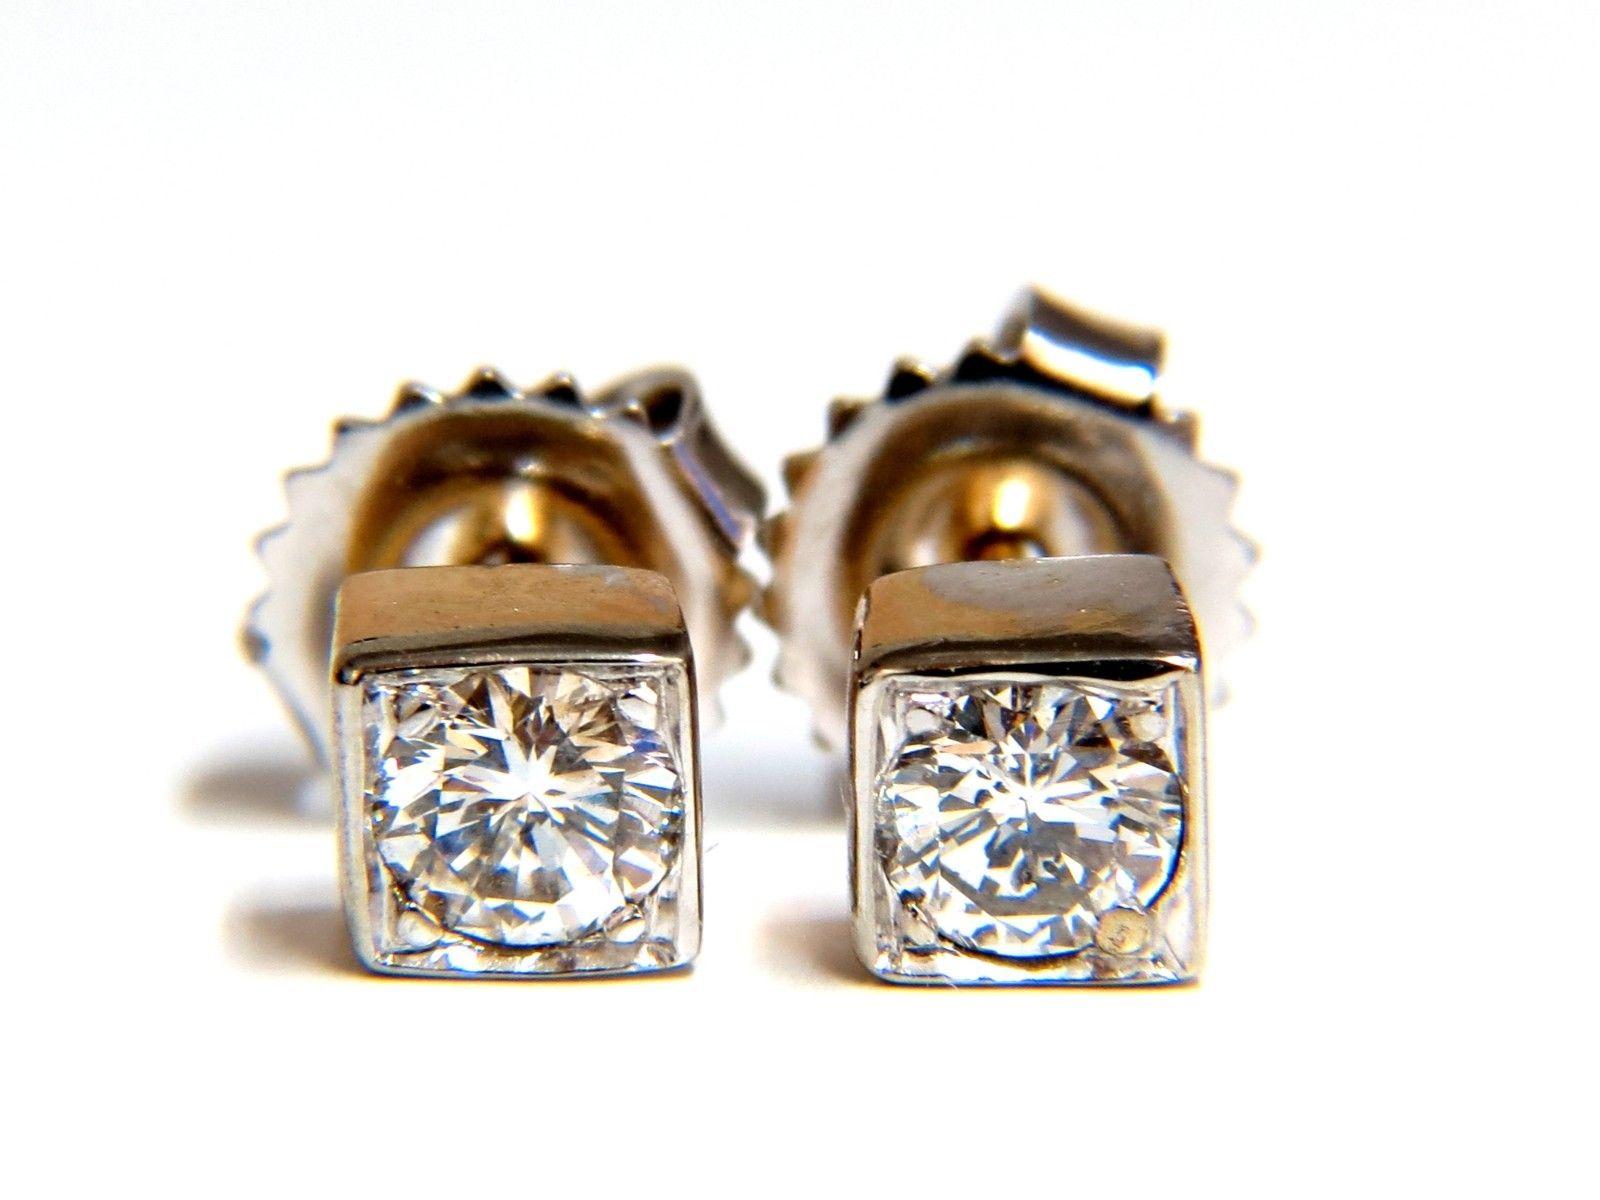 70 carat diamond earrings